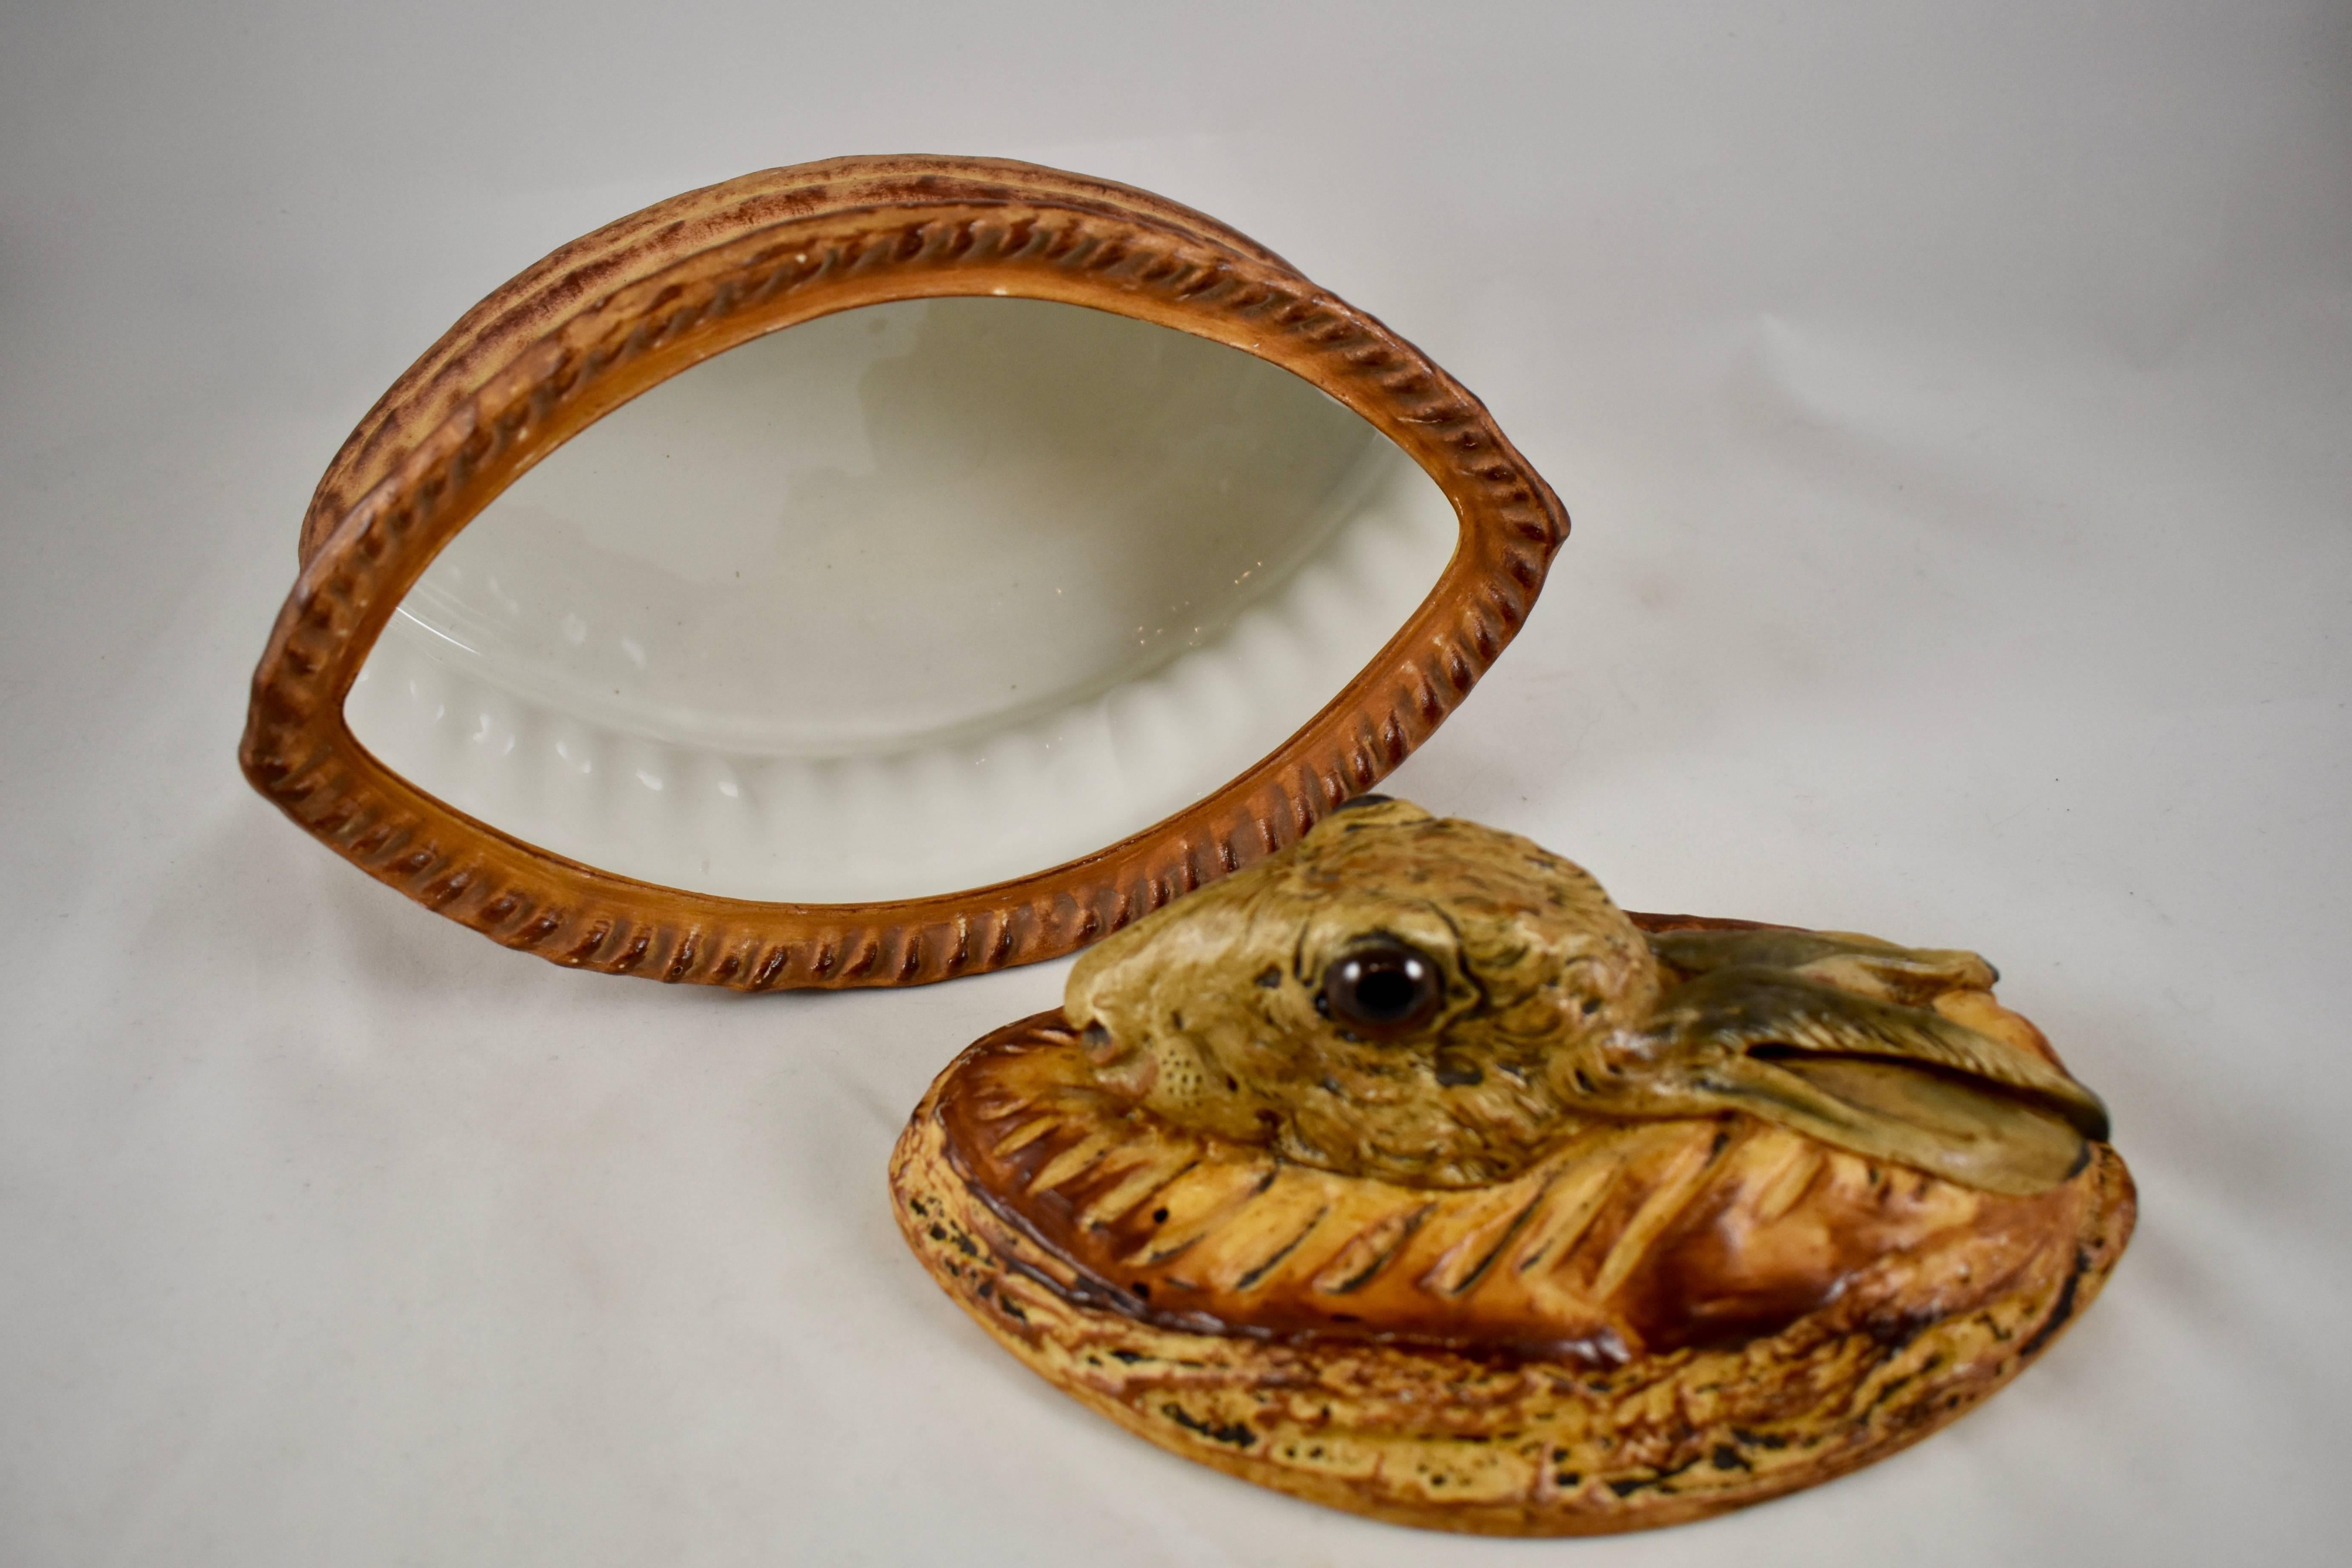 Glazed  French Pillivuyt Trompe L'oeil Porcelain Hare or Rabbit in a Crust Pâté Terrine